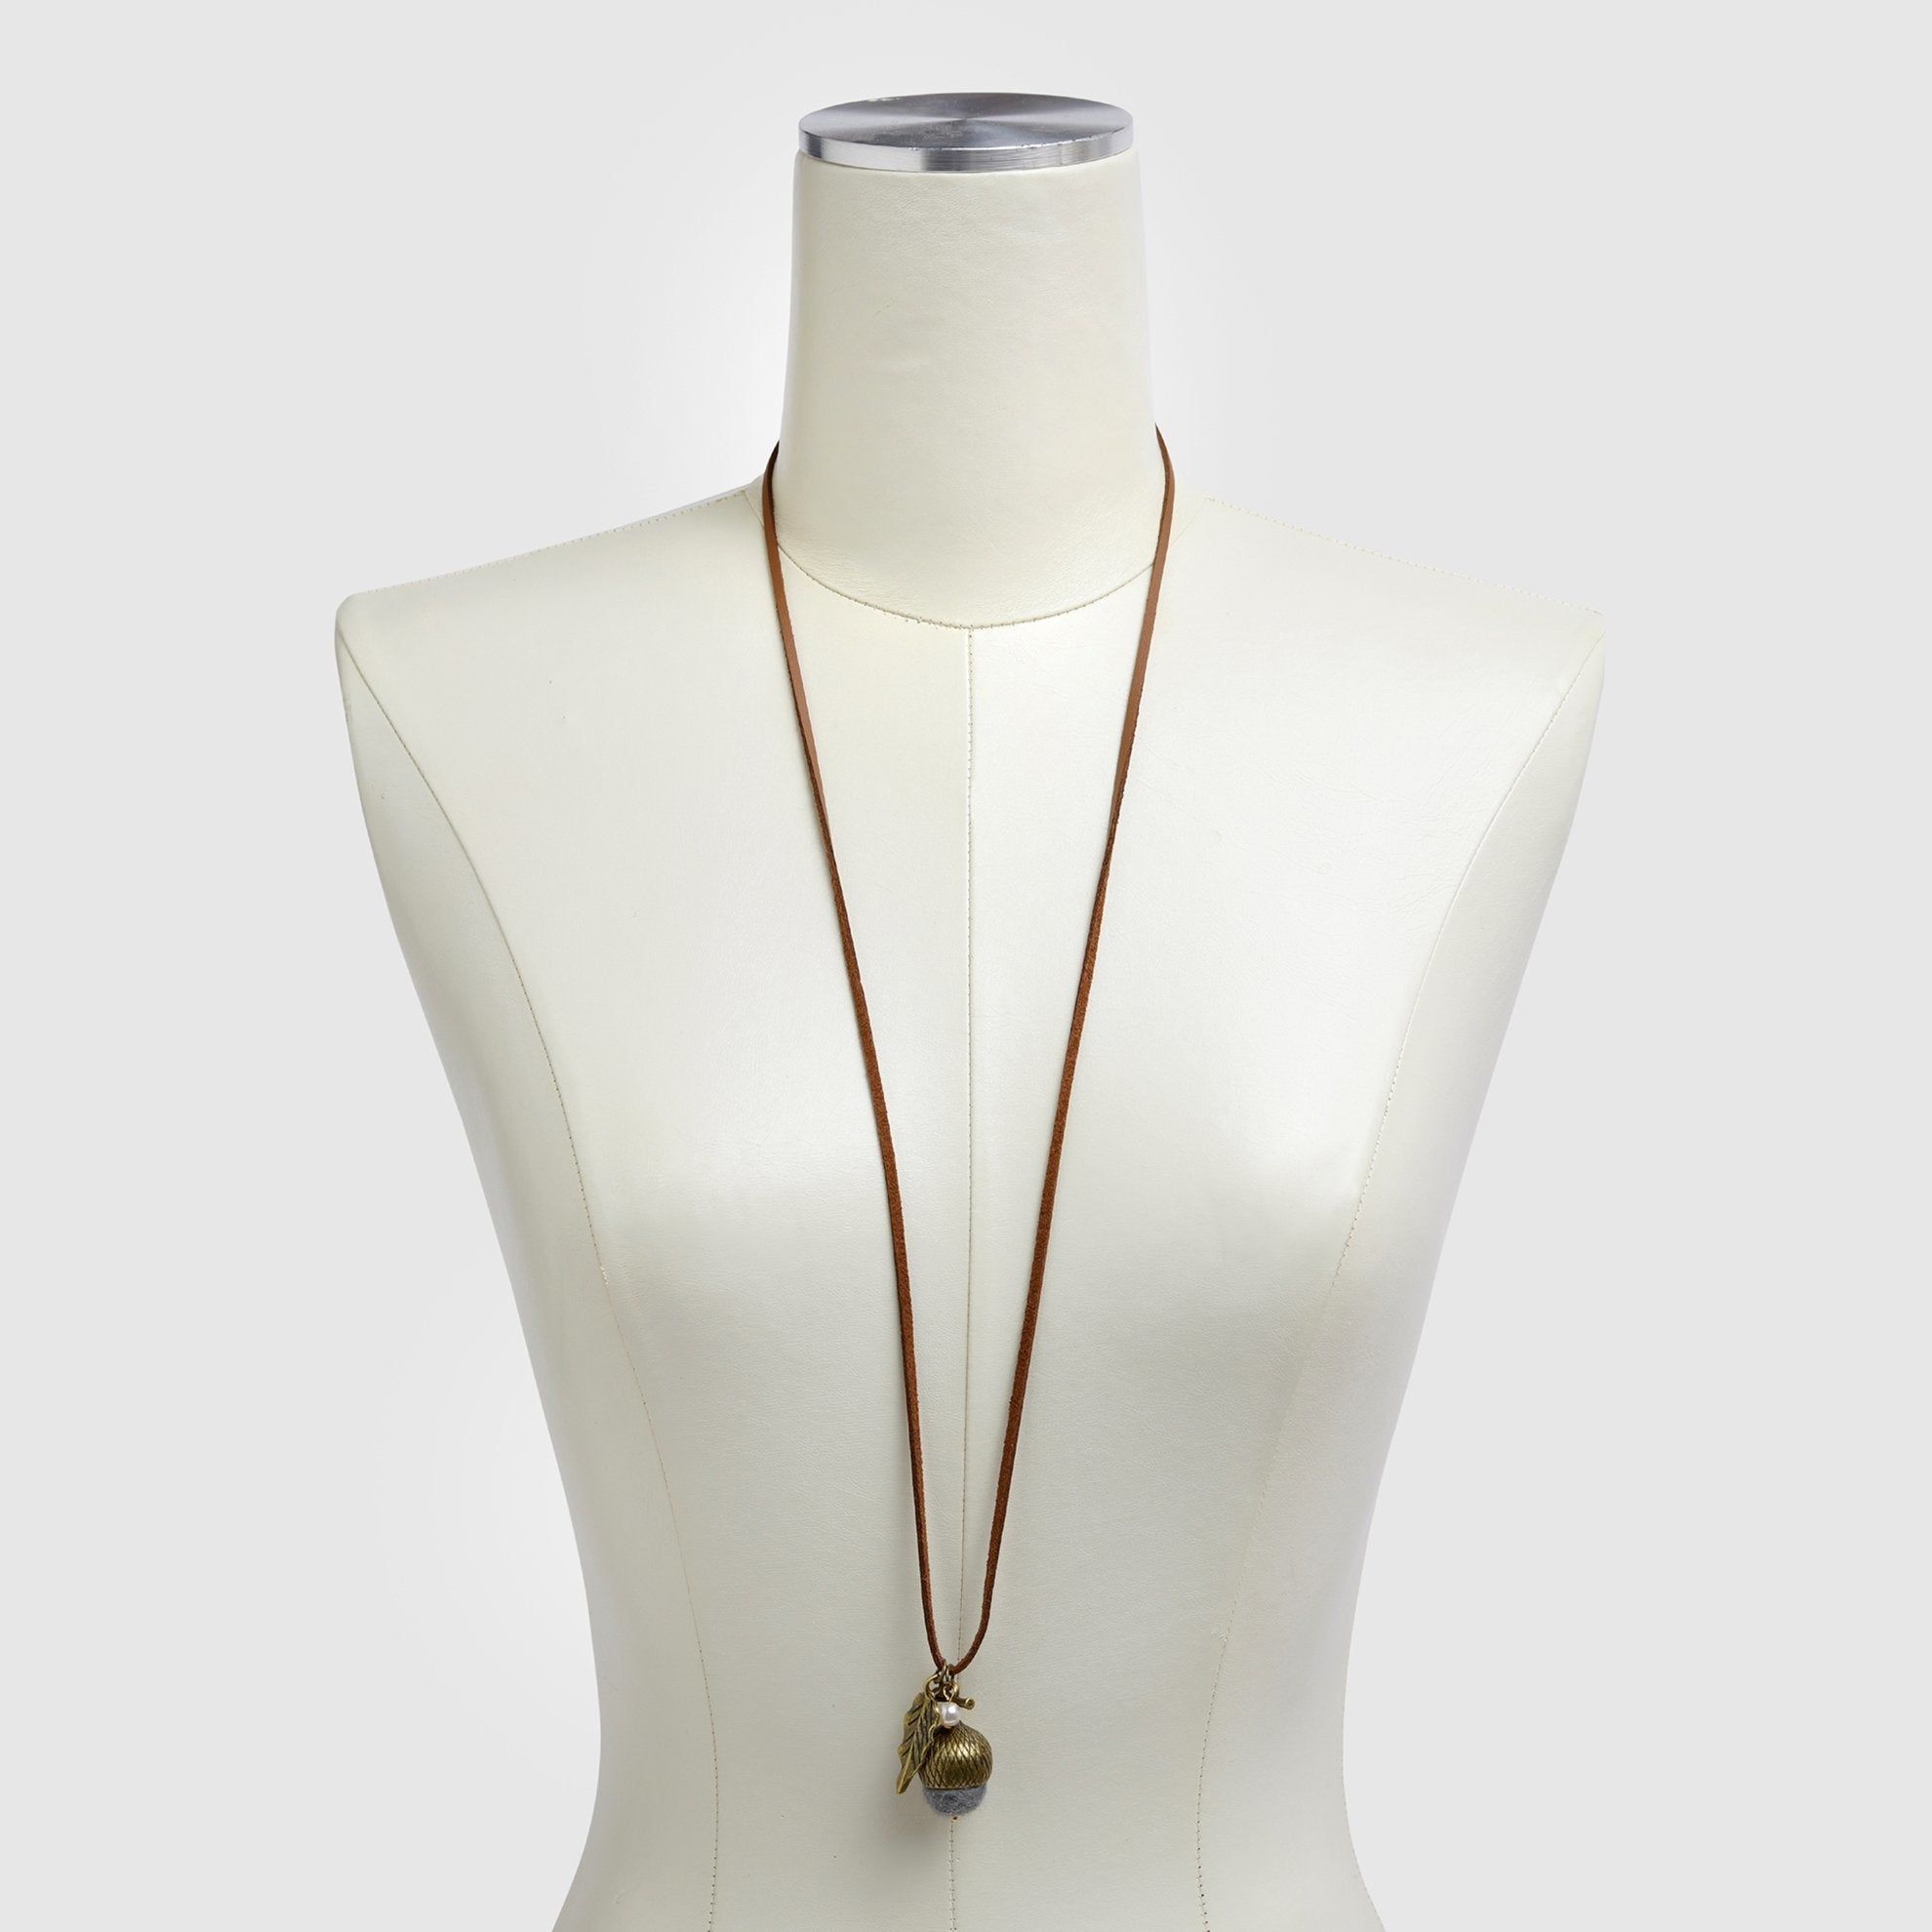 Necklace on Dress Form